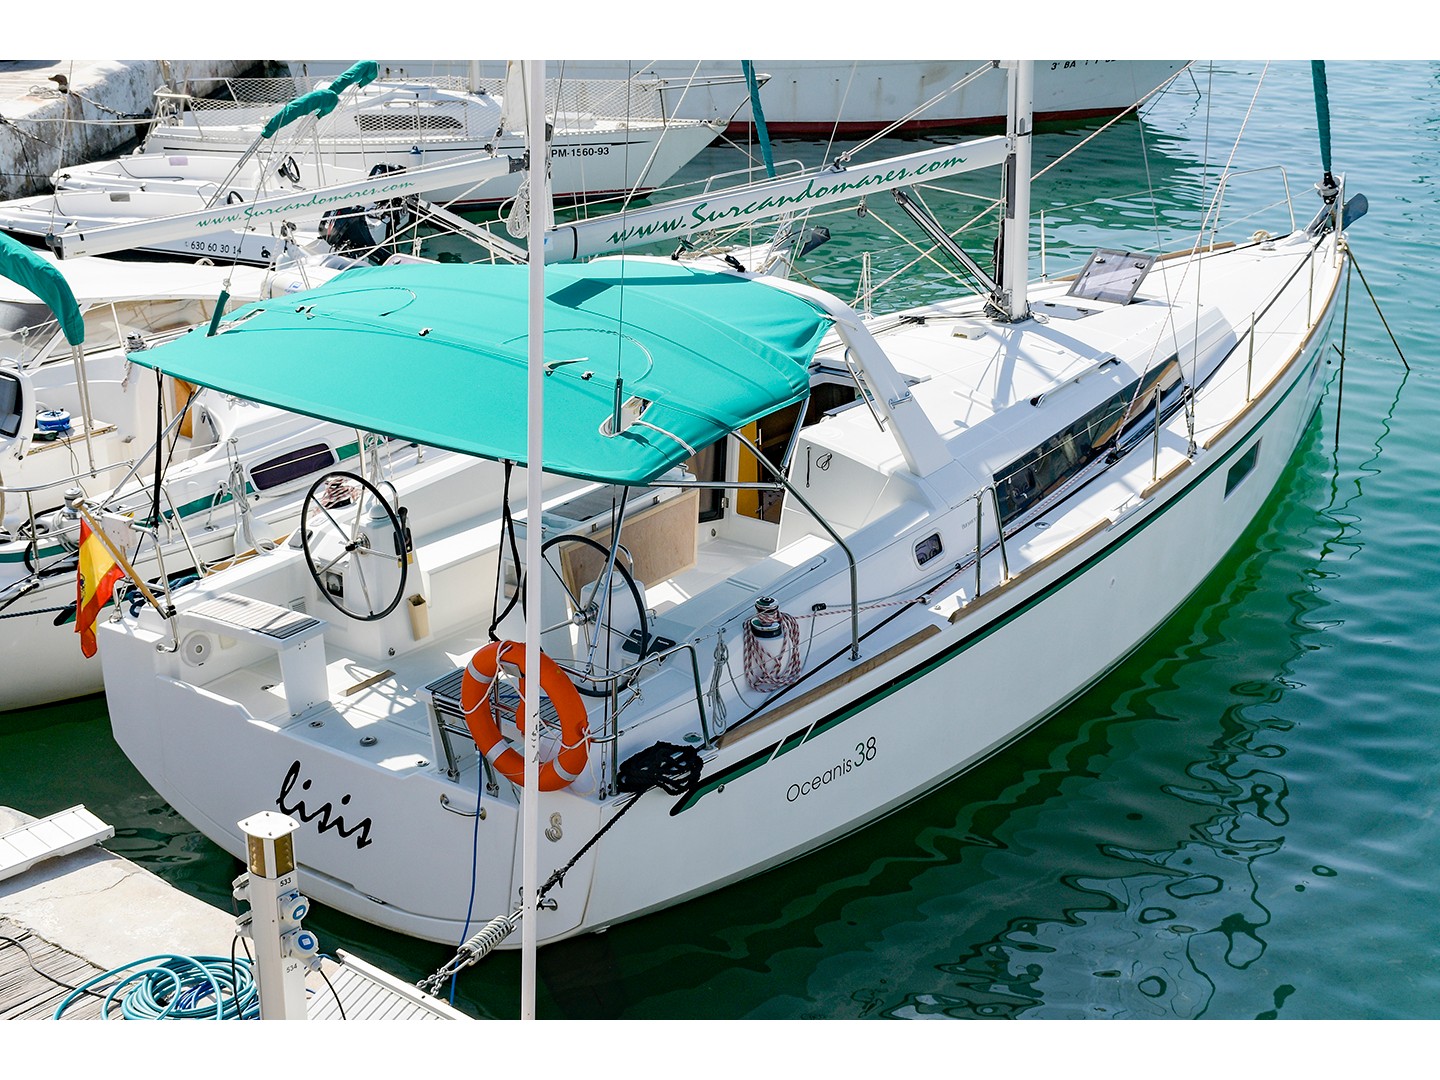 Oceanis 38 - Yacht Charter Barcelona & Boat hire in Spain Catalonia Costa Brava Barcelona Sitges Port d'Aiguadolç 2